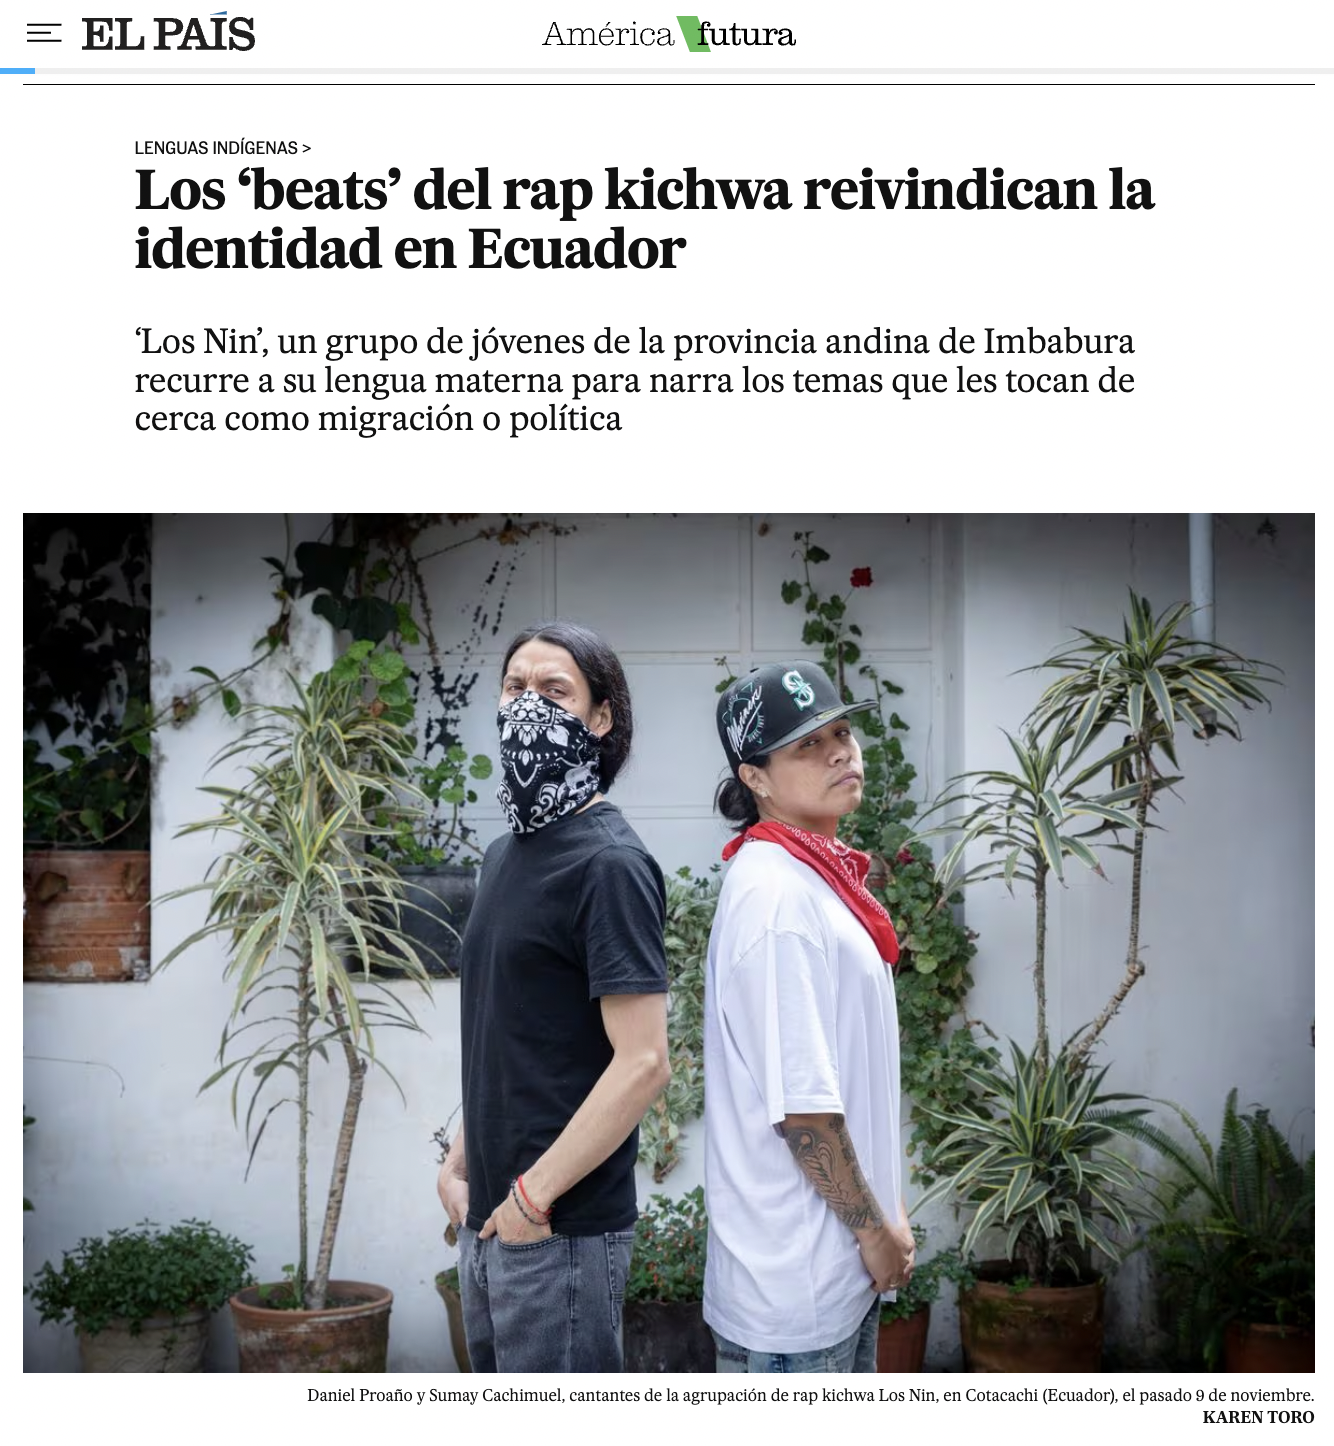 Image from Tearsheets -  Para América Futura - El País 